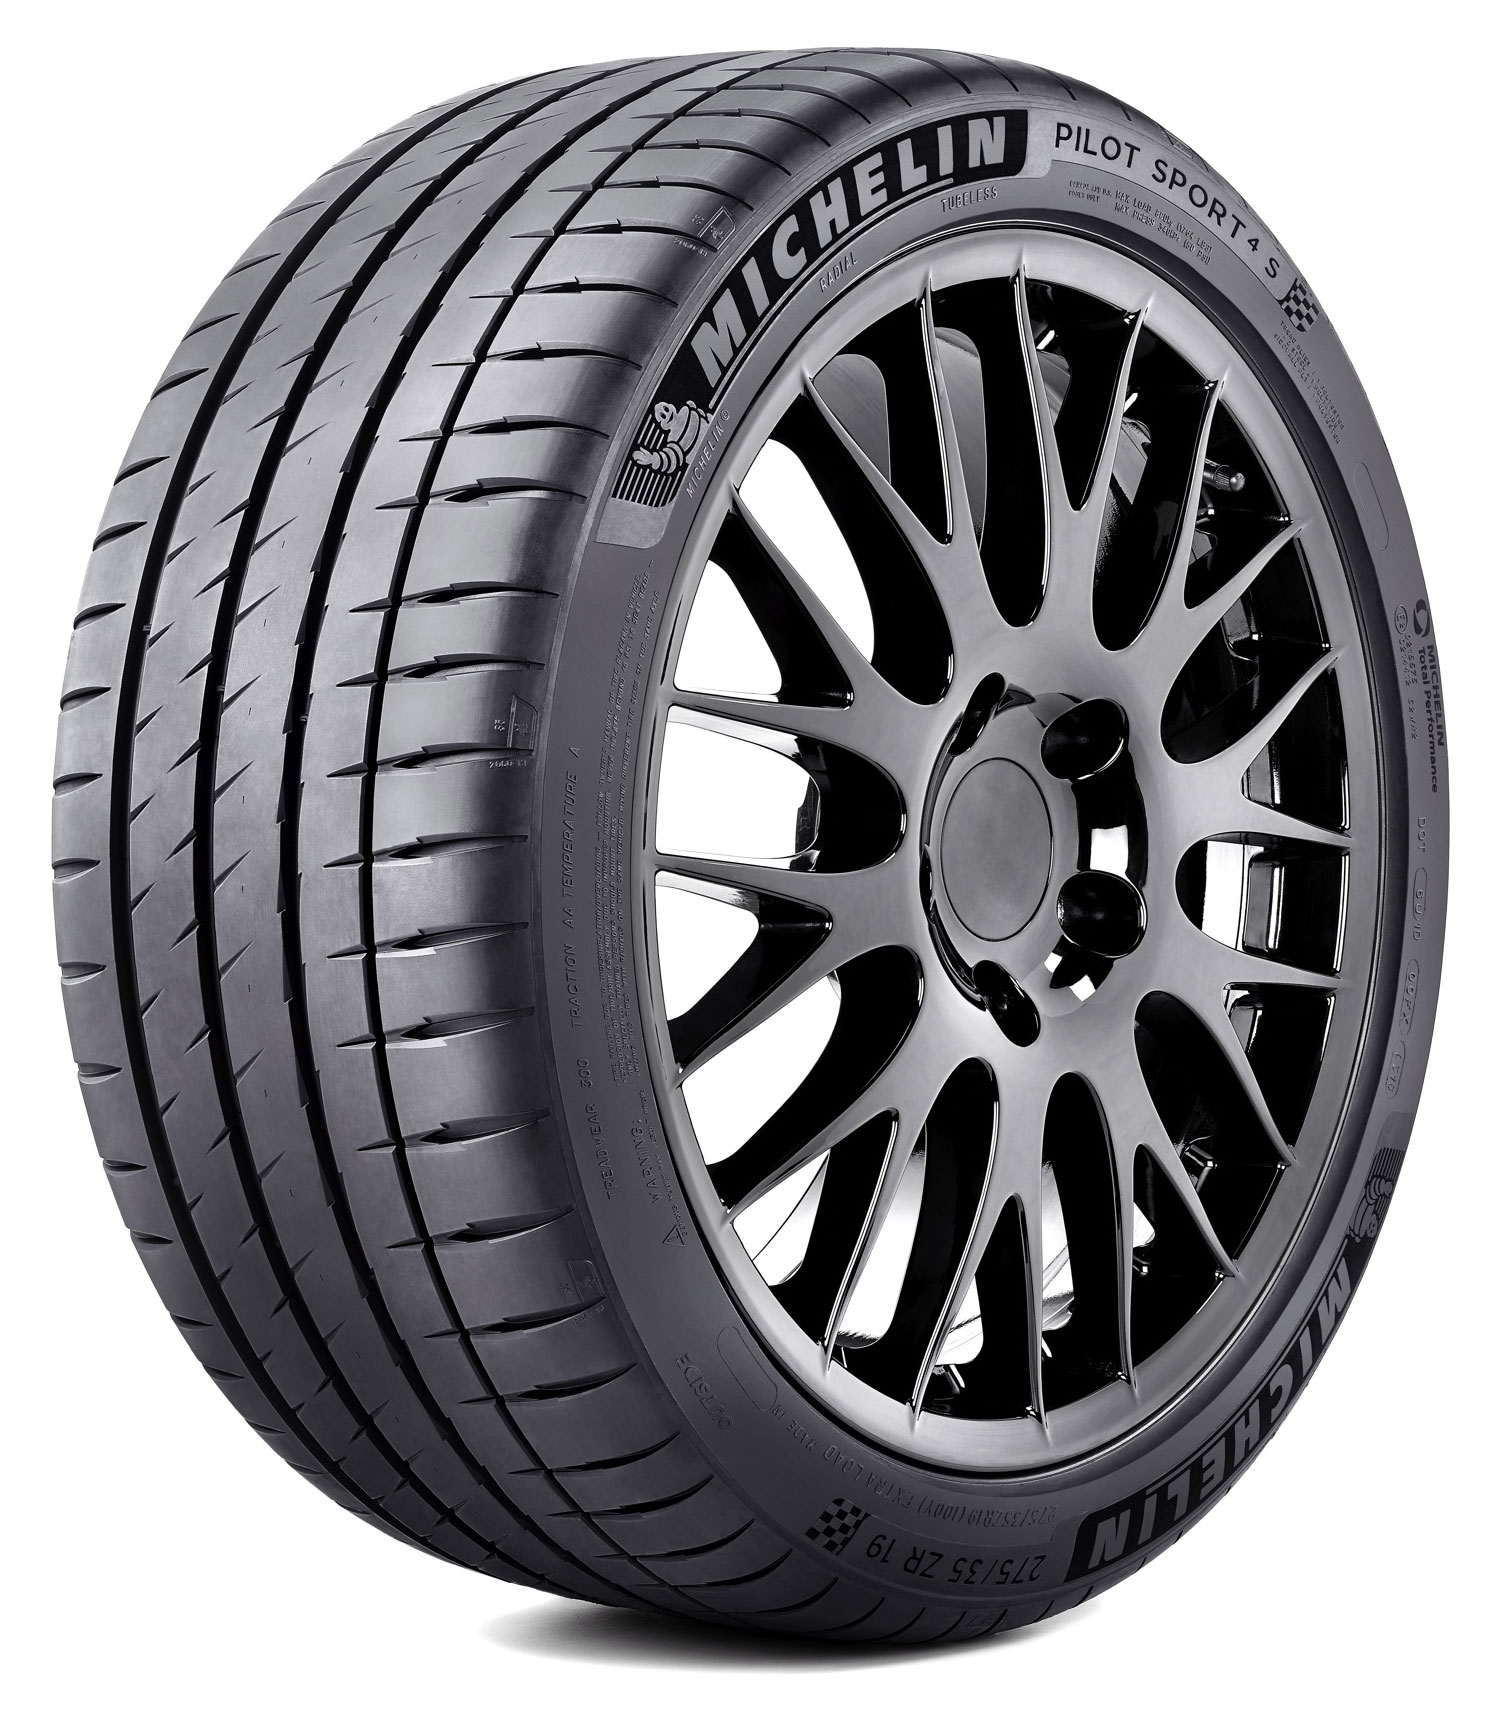 Gomme Nuove Michelin 255/45 R17 98Y PLT. SPORT 4 pneumatici nuovi Estivo